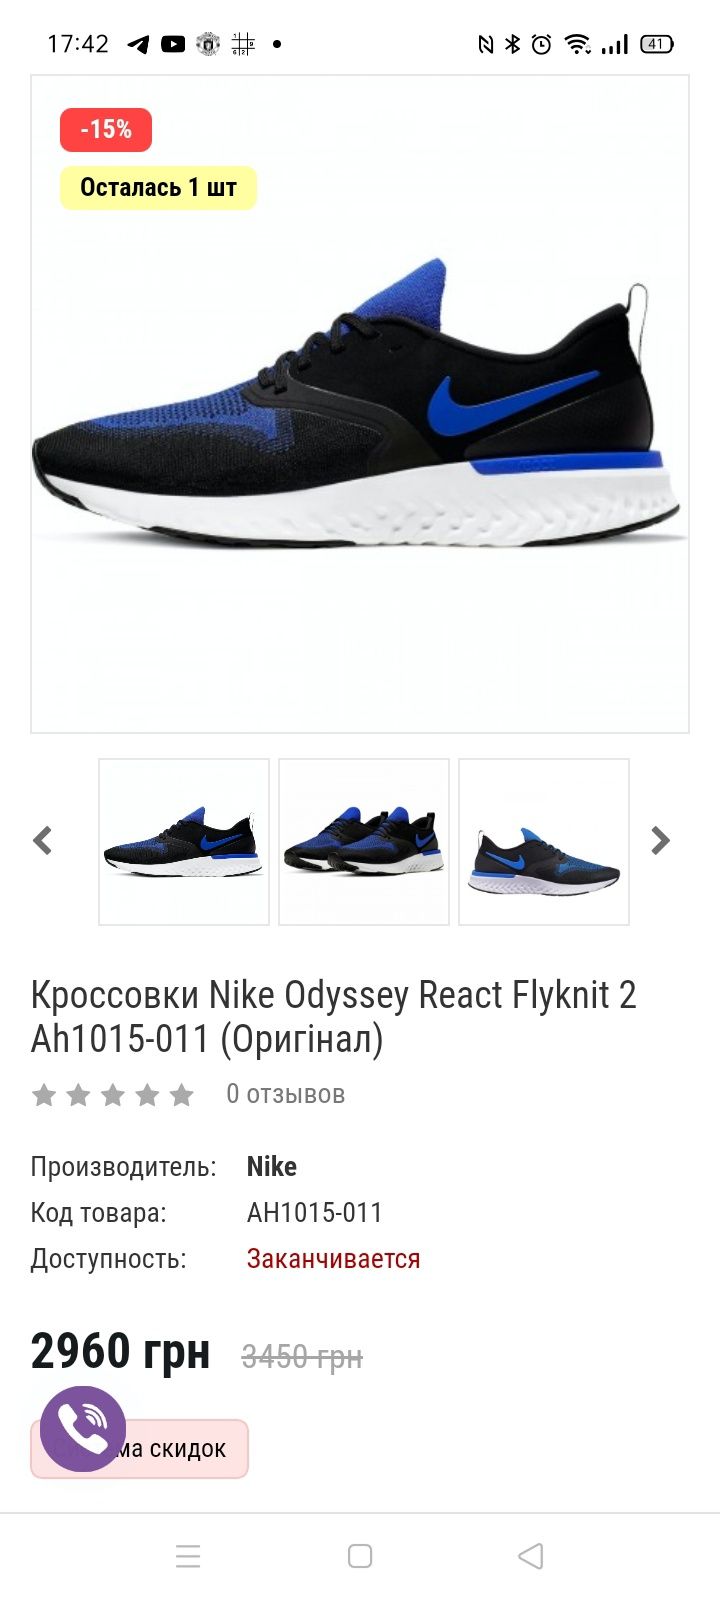 Кроссовки мужские Nike odyssey react flyknit 2